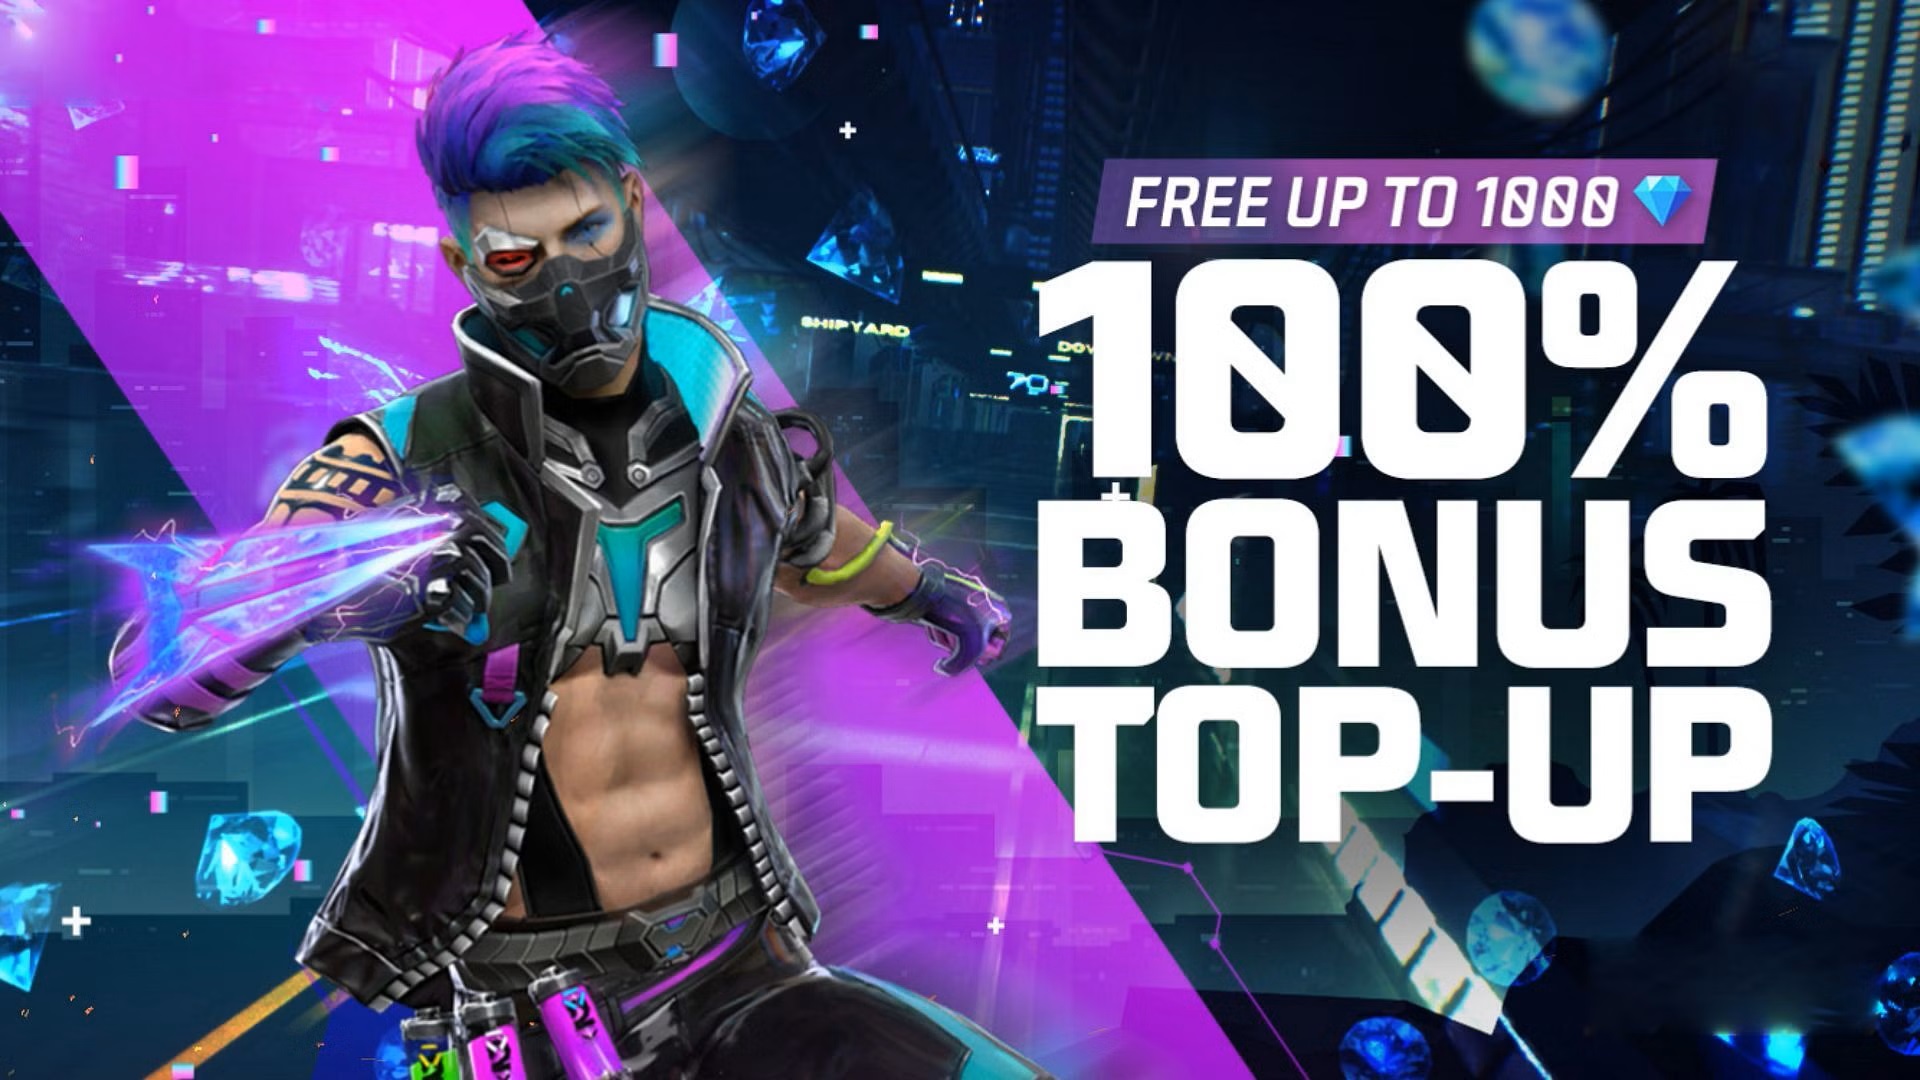 Free Fire Max 100% Bonus Top-up Event